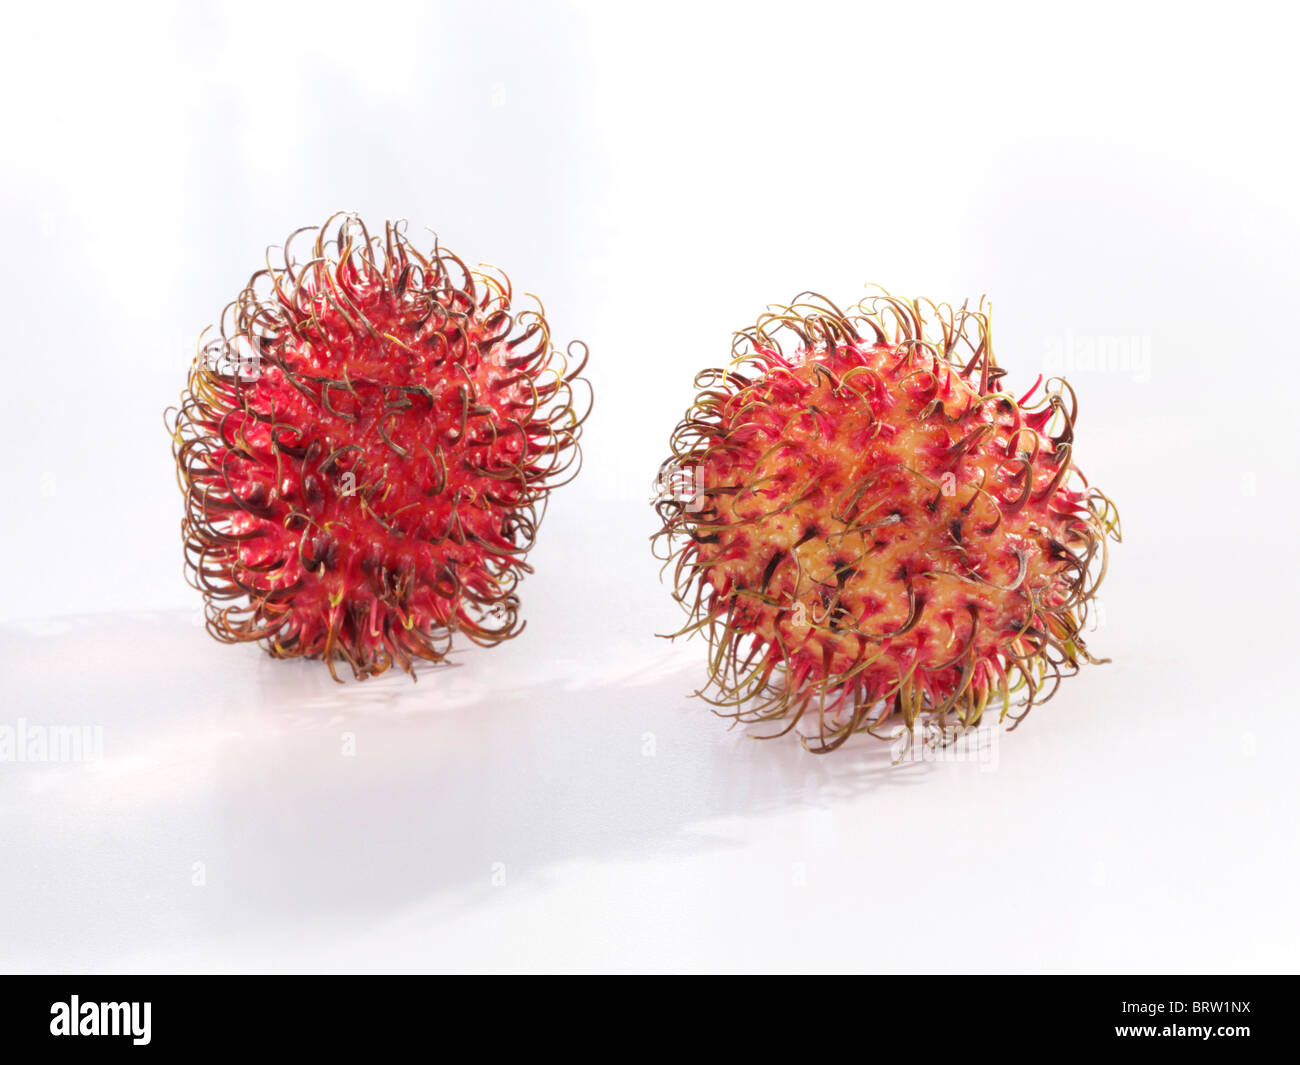 Two rambutan fruits (Nephelium lappaceum) Stock Photo